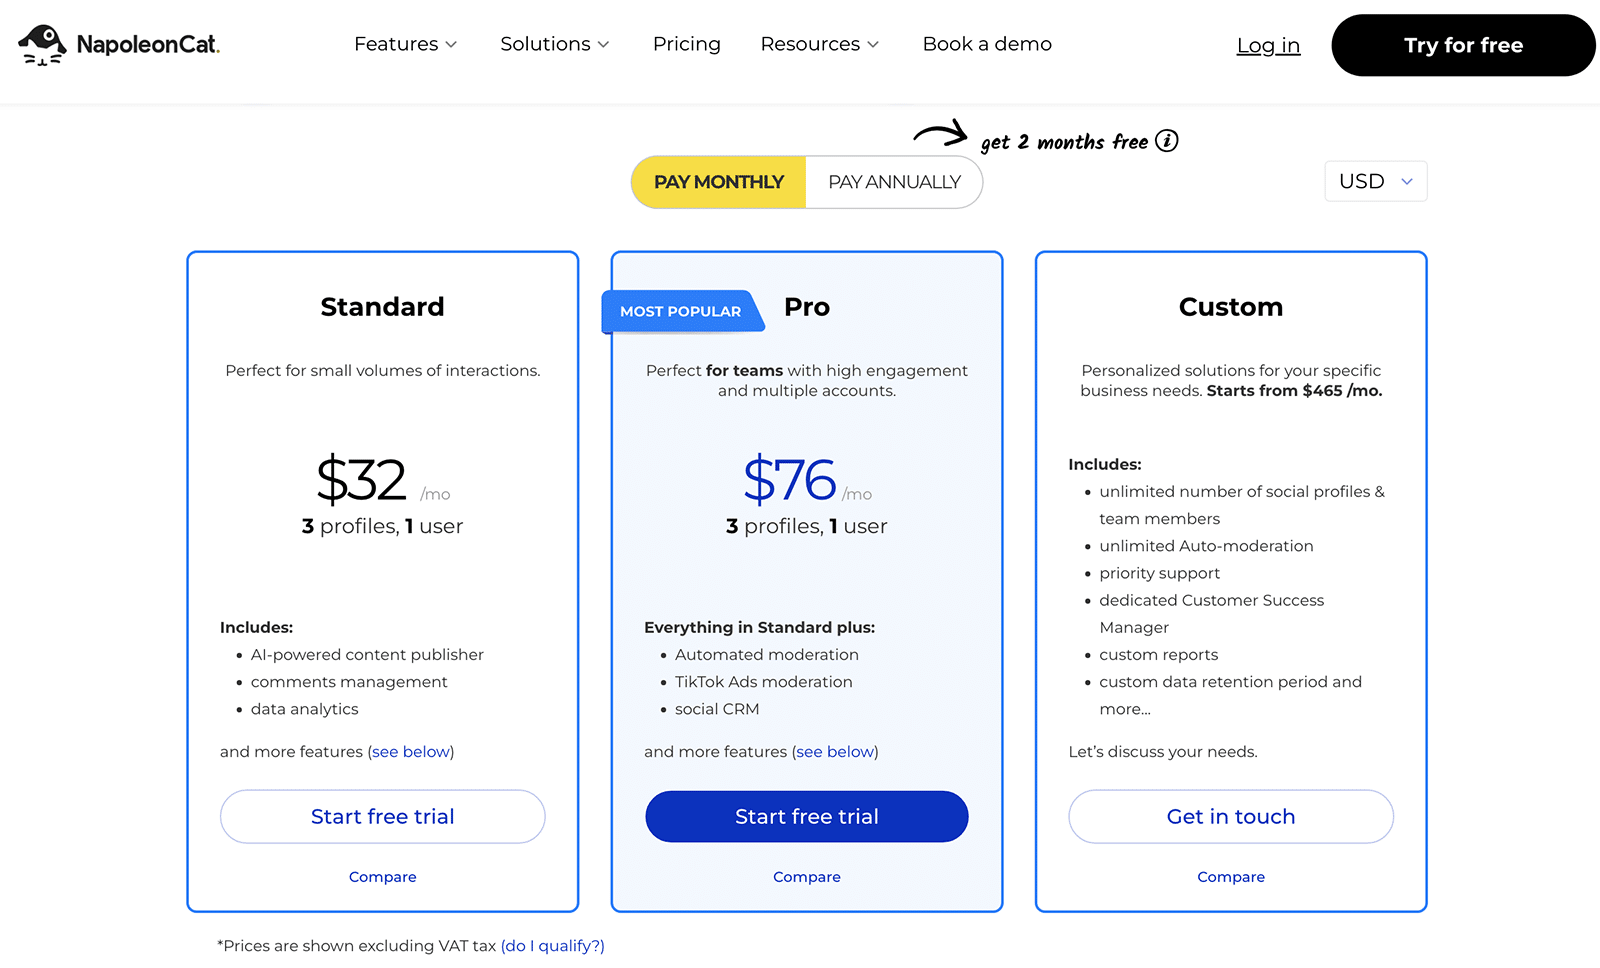 NapoleonCat pricing for 3 profiles